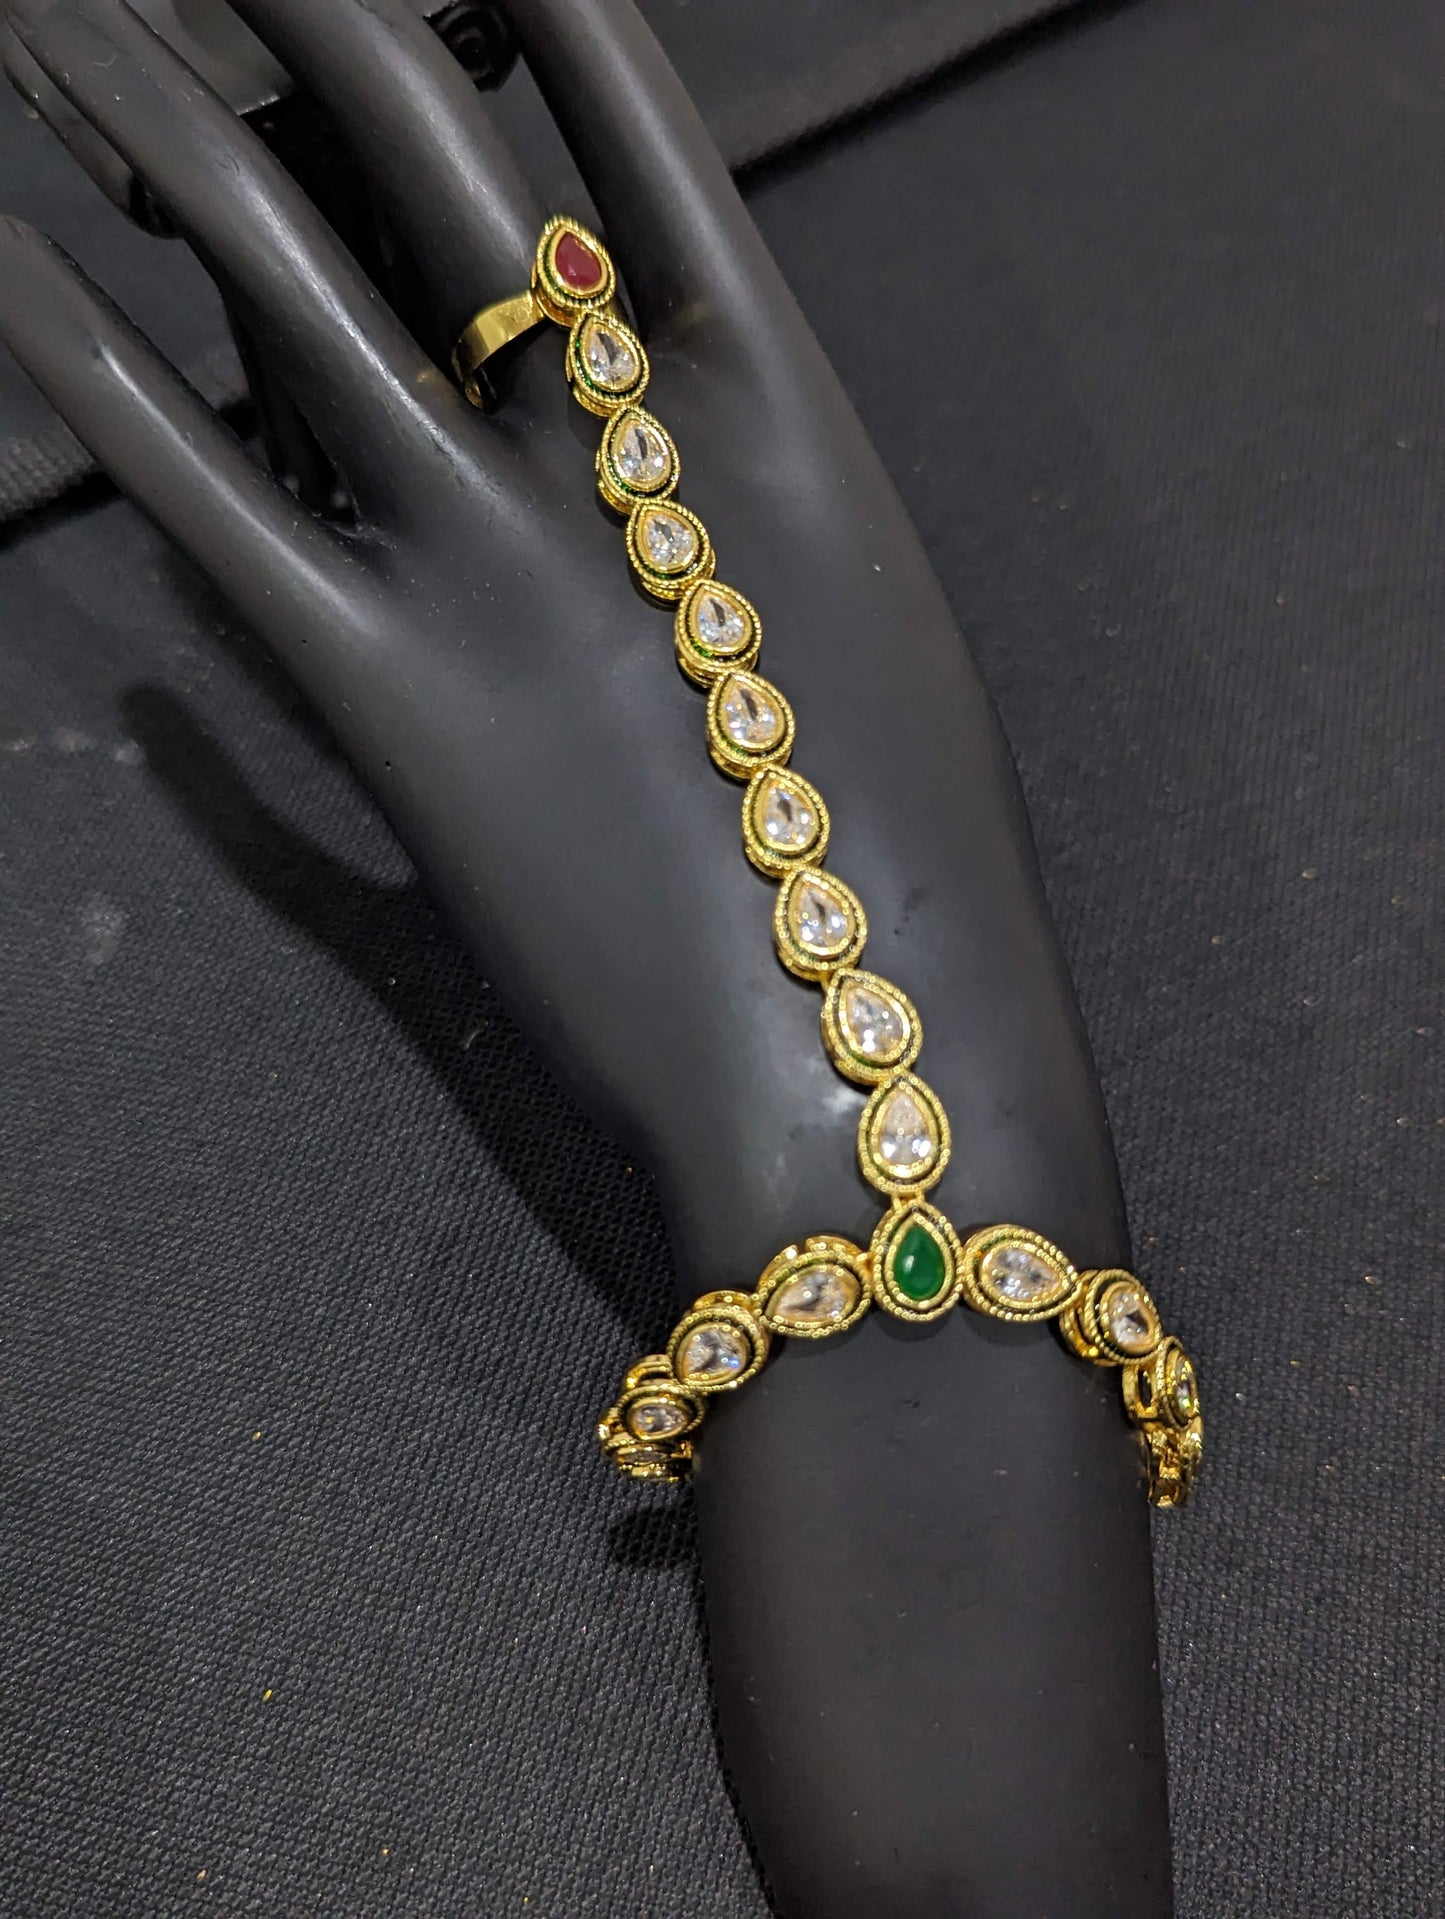 Polki Haath Phool / Bracelet Ring Combo / Ring Chain Bracelet / Indian Wedding Jewelry - D1